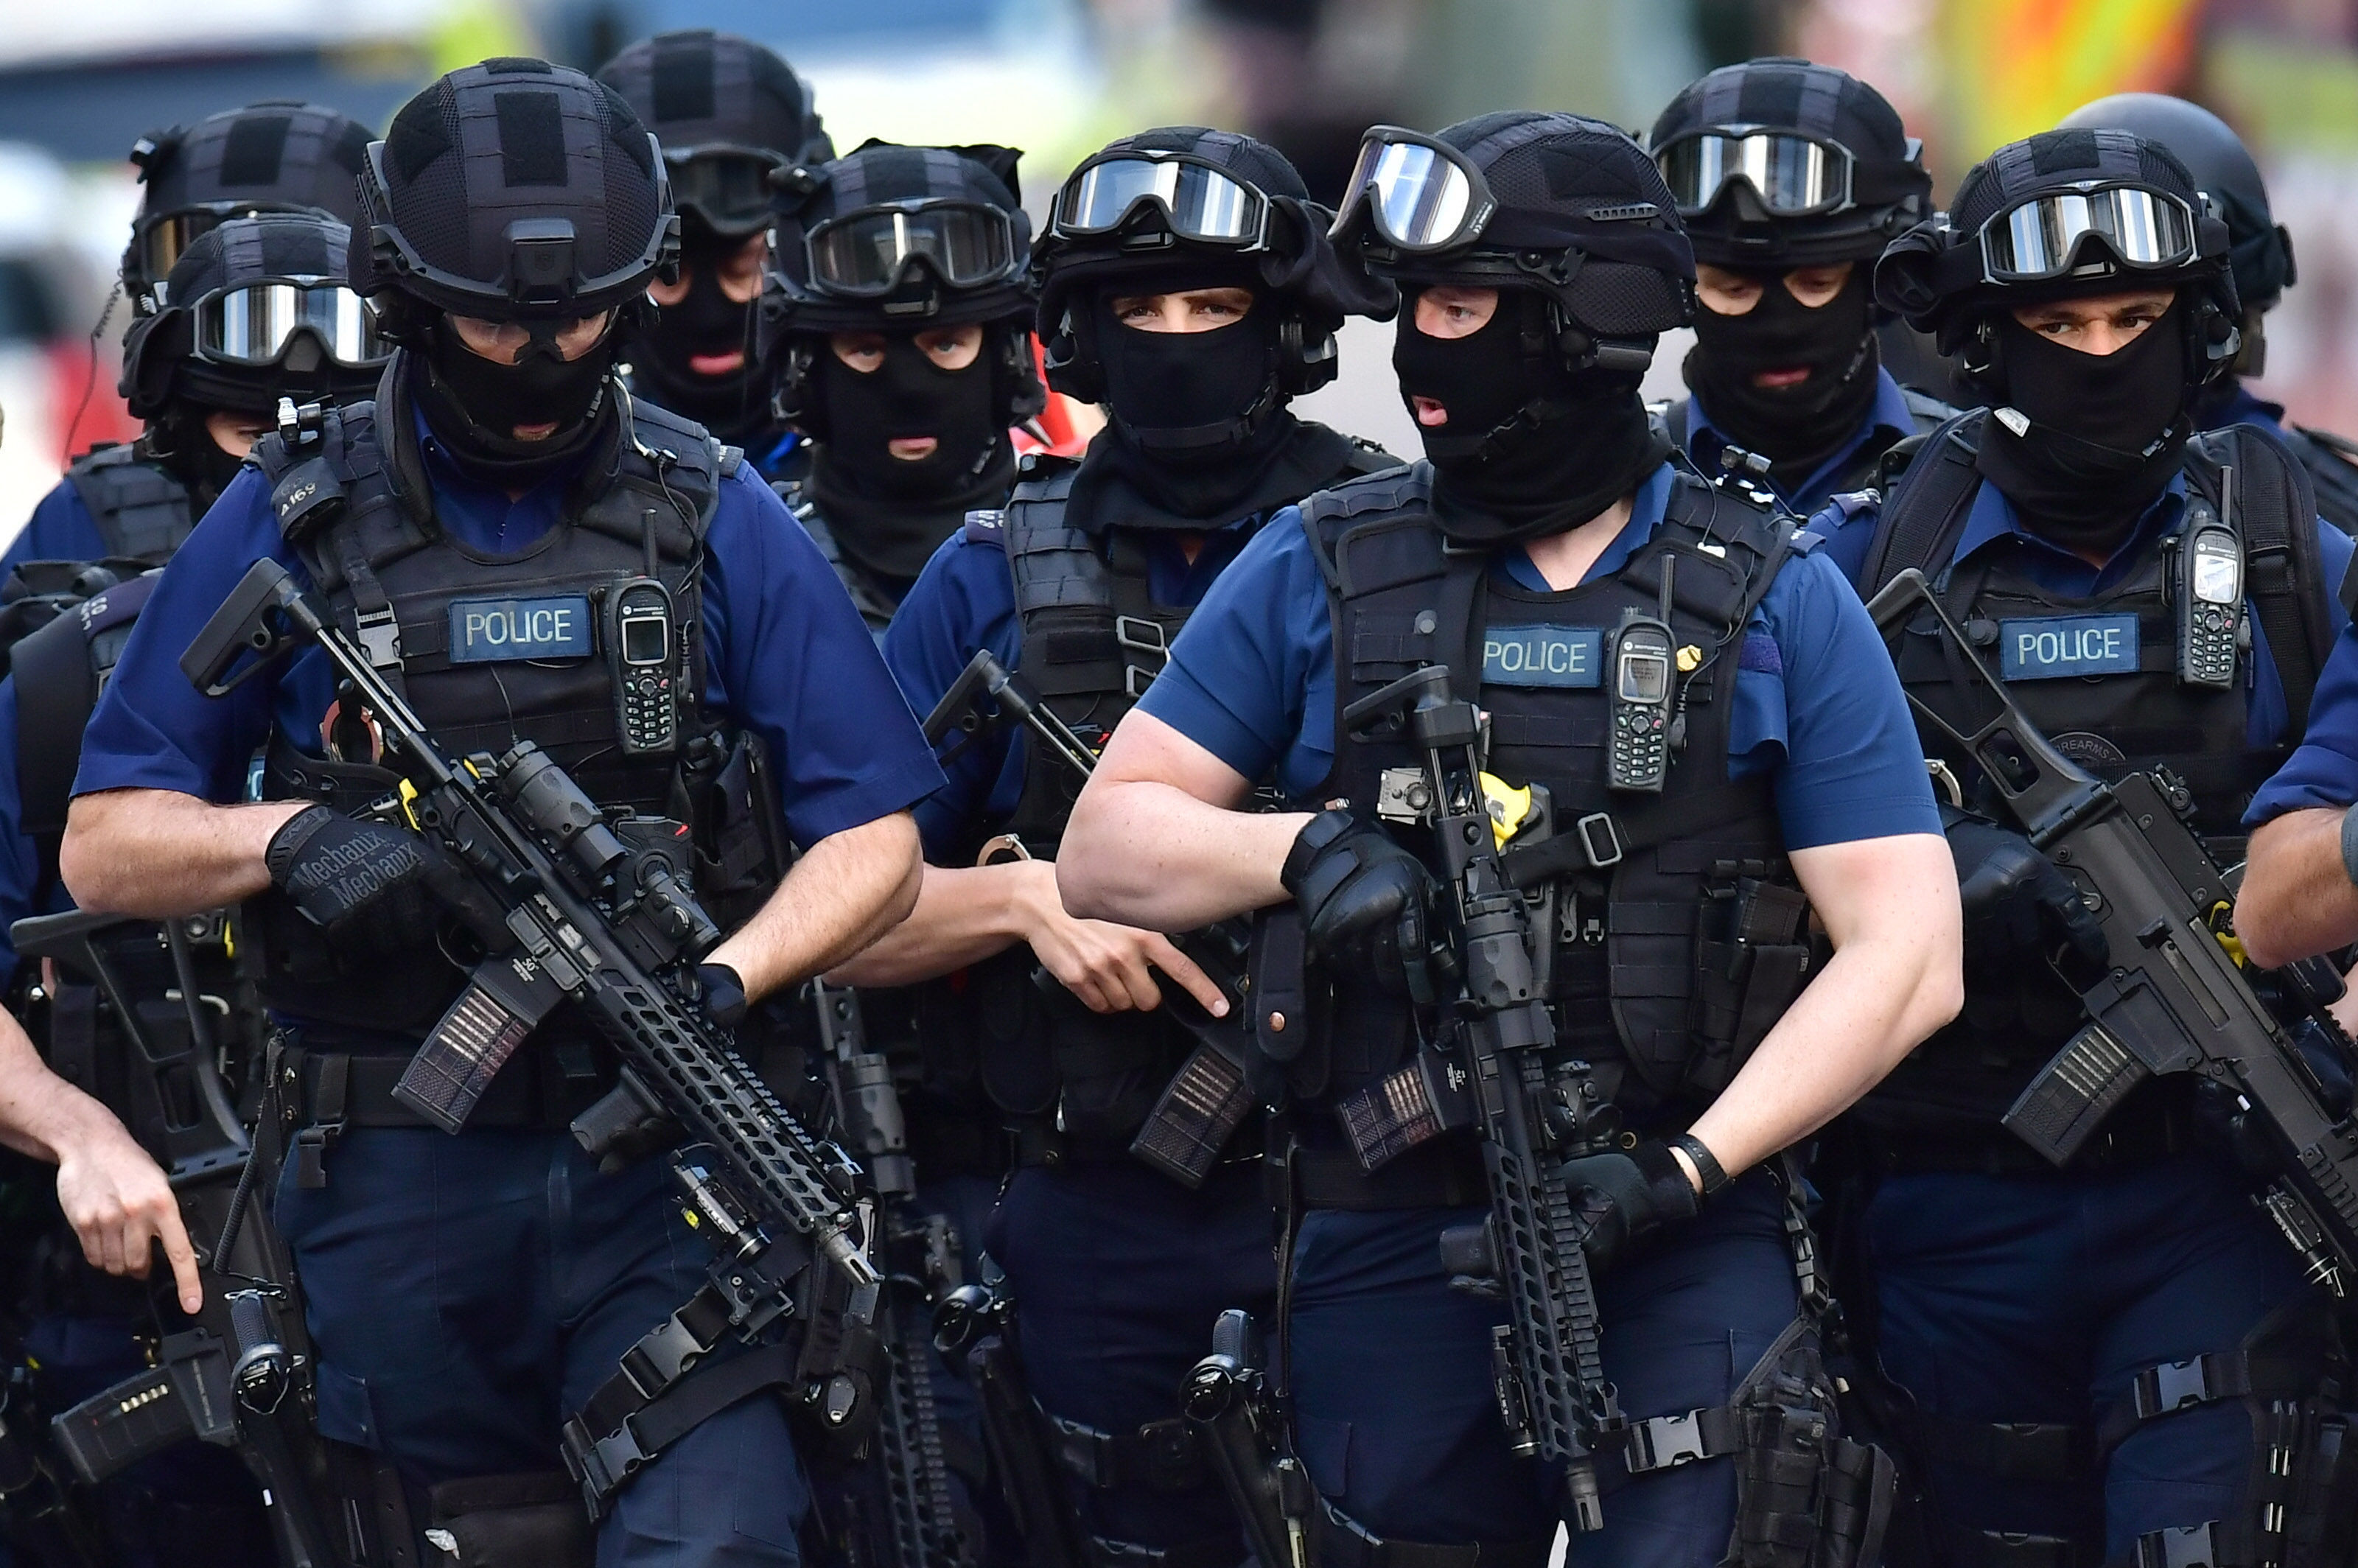 Armed police on St Thomas Street, London, near the scene of last night's terrorist incident at Borough Market. (Dominic Lipinski/PA Wire)